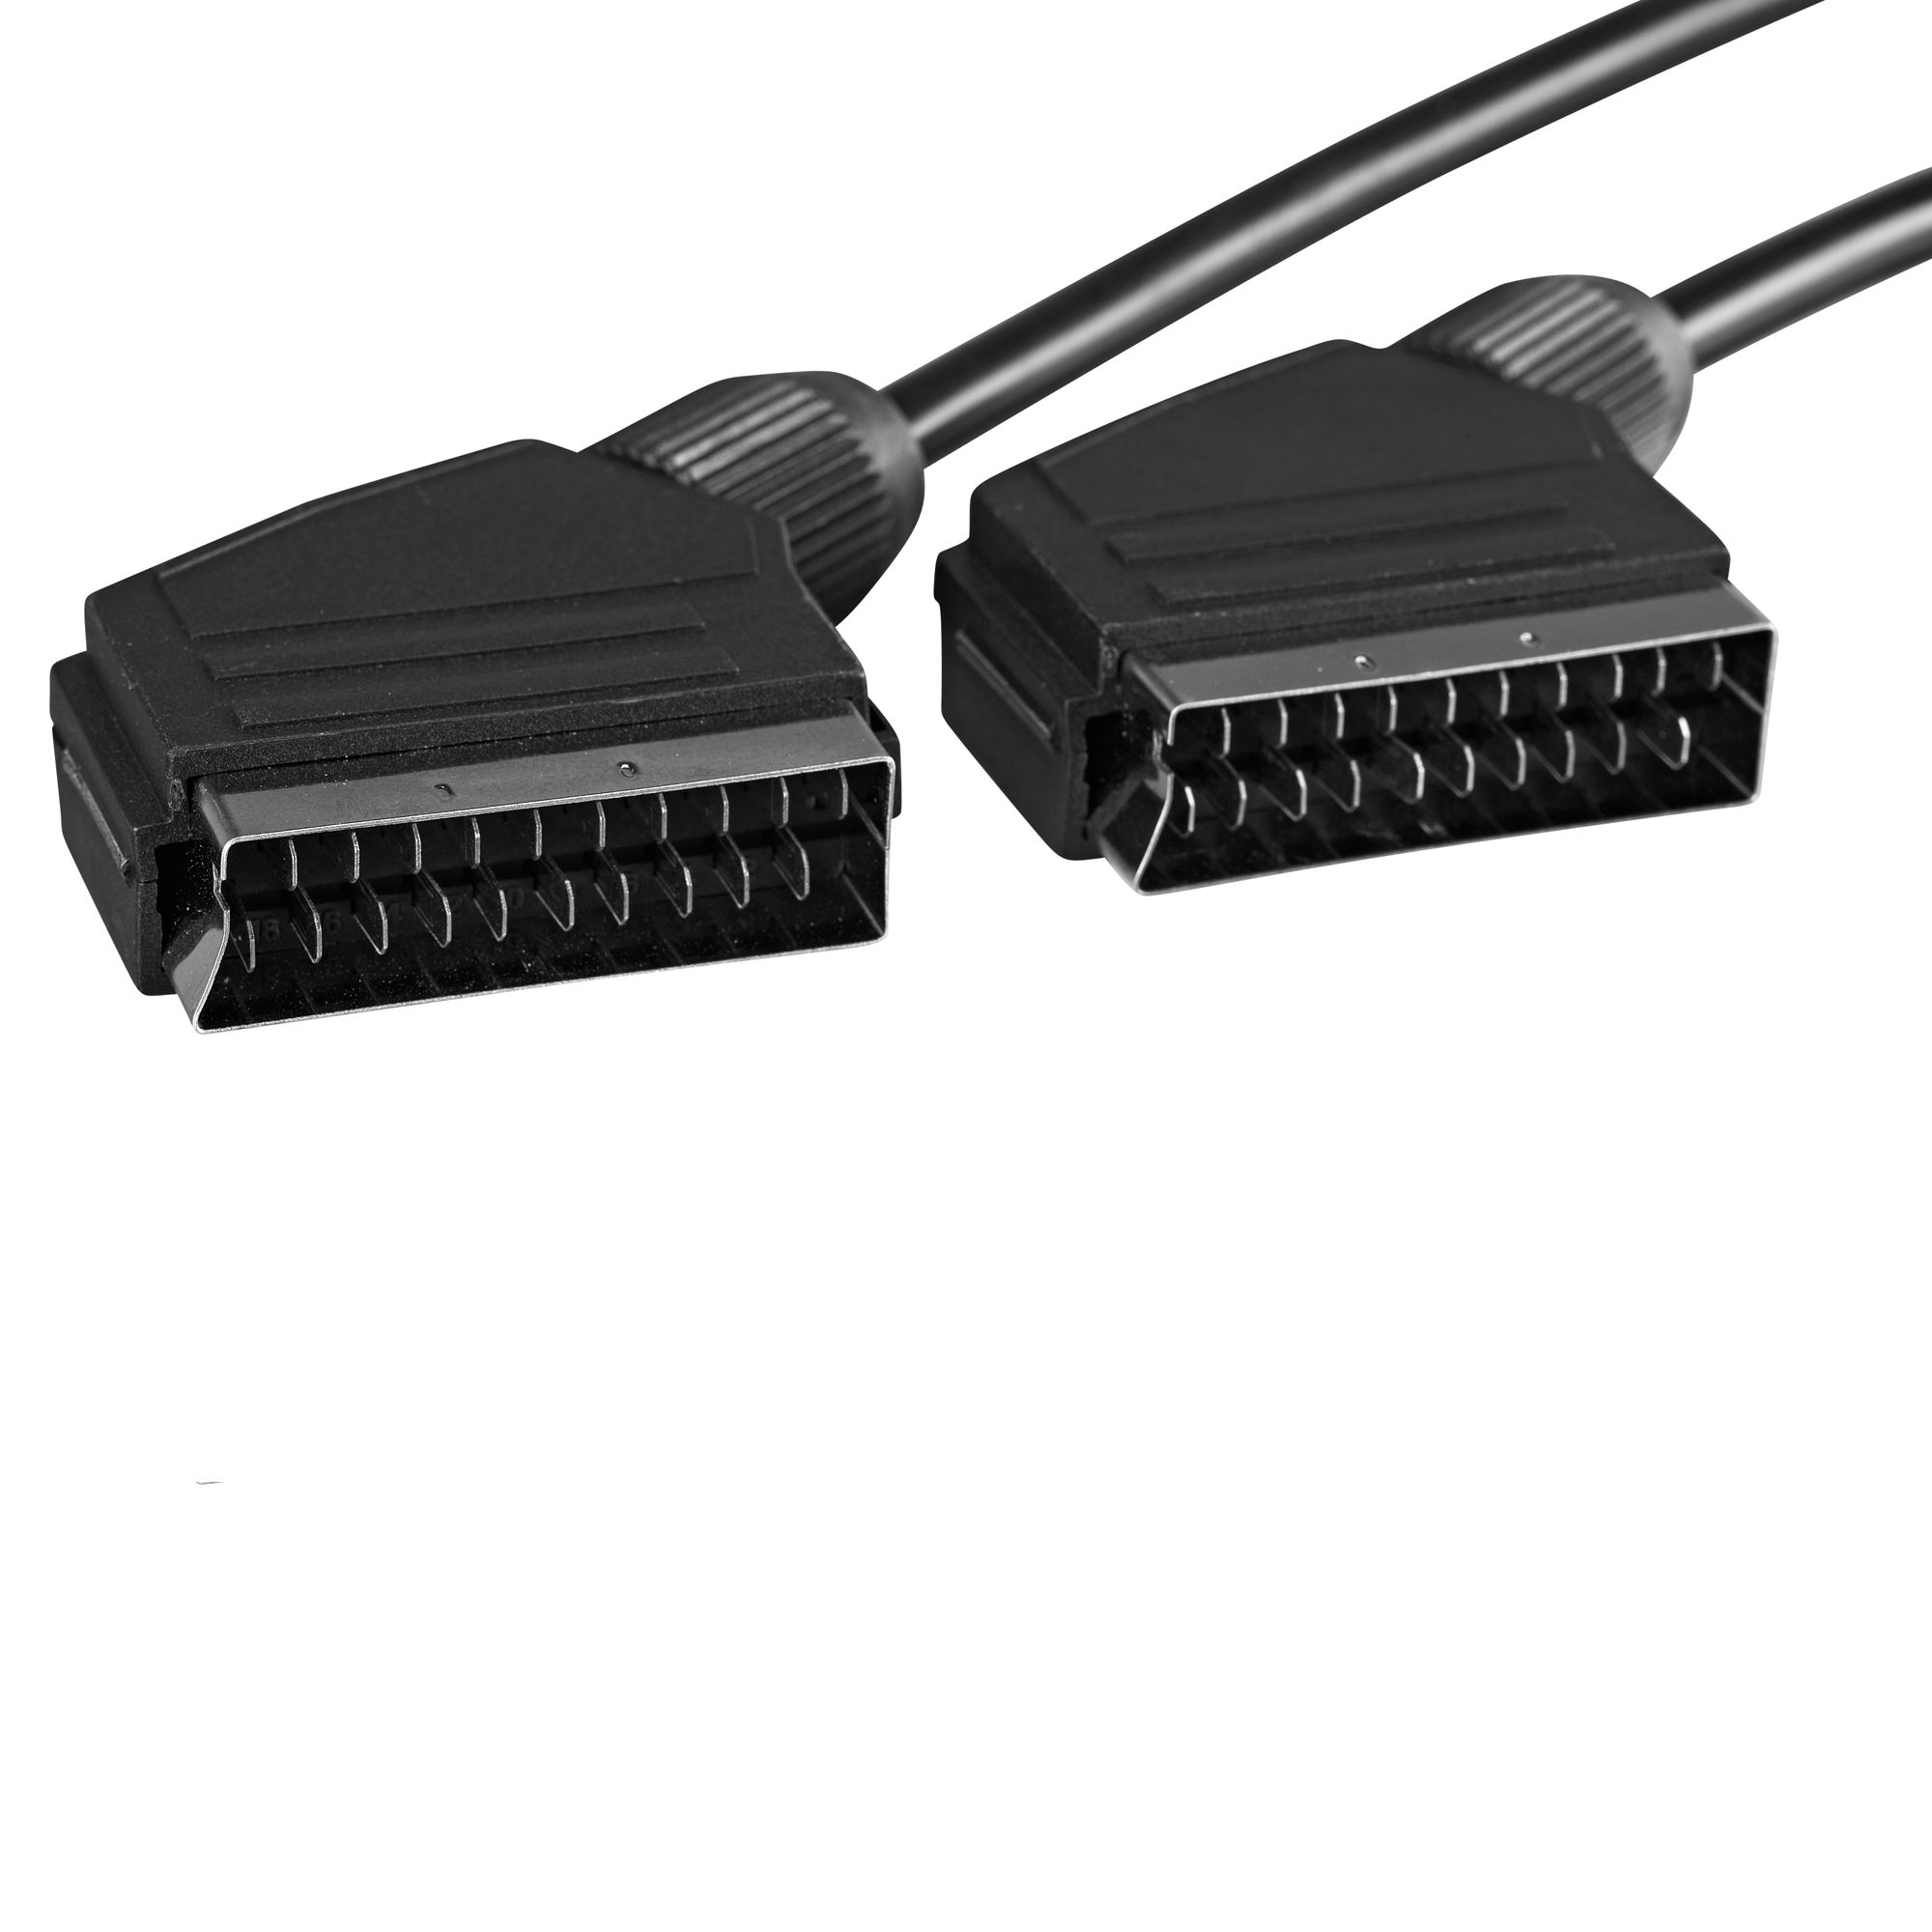 SCART-Kabel schwarz 21-pol. 1,5 m + product picture